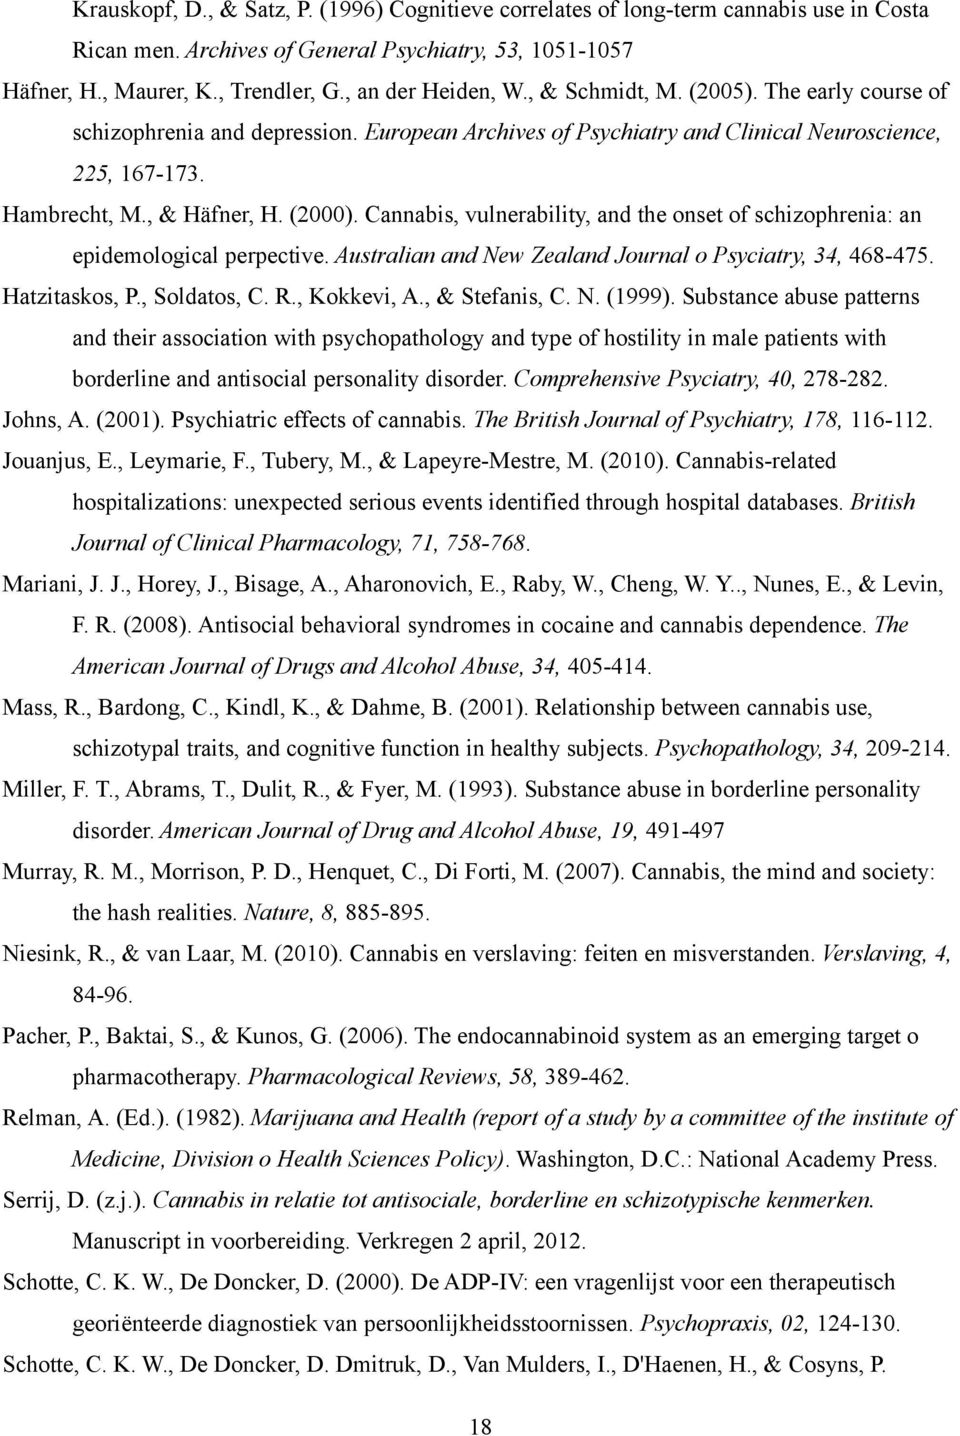 (2000). Cannabis, vulnerability, and the onset of schizophrenia: an epidemological perpective. Australian and New Zealand Journal o Psyciatry, 34, 468-475. Hatzitaskos, P., Soldatos, C. R.